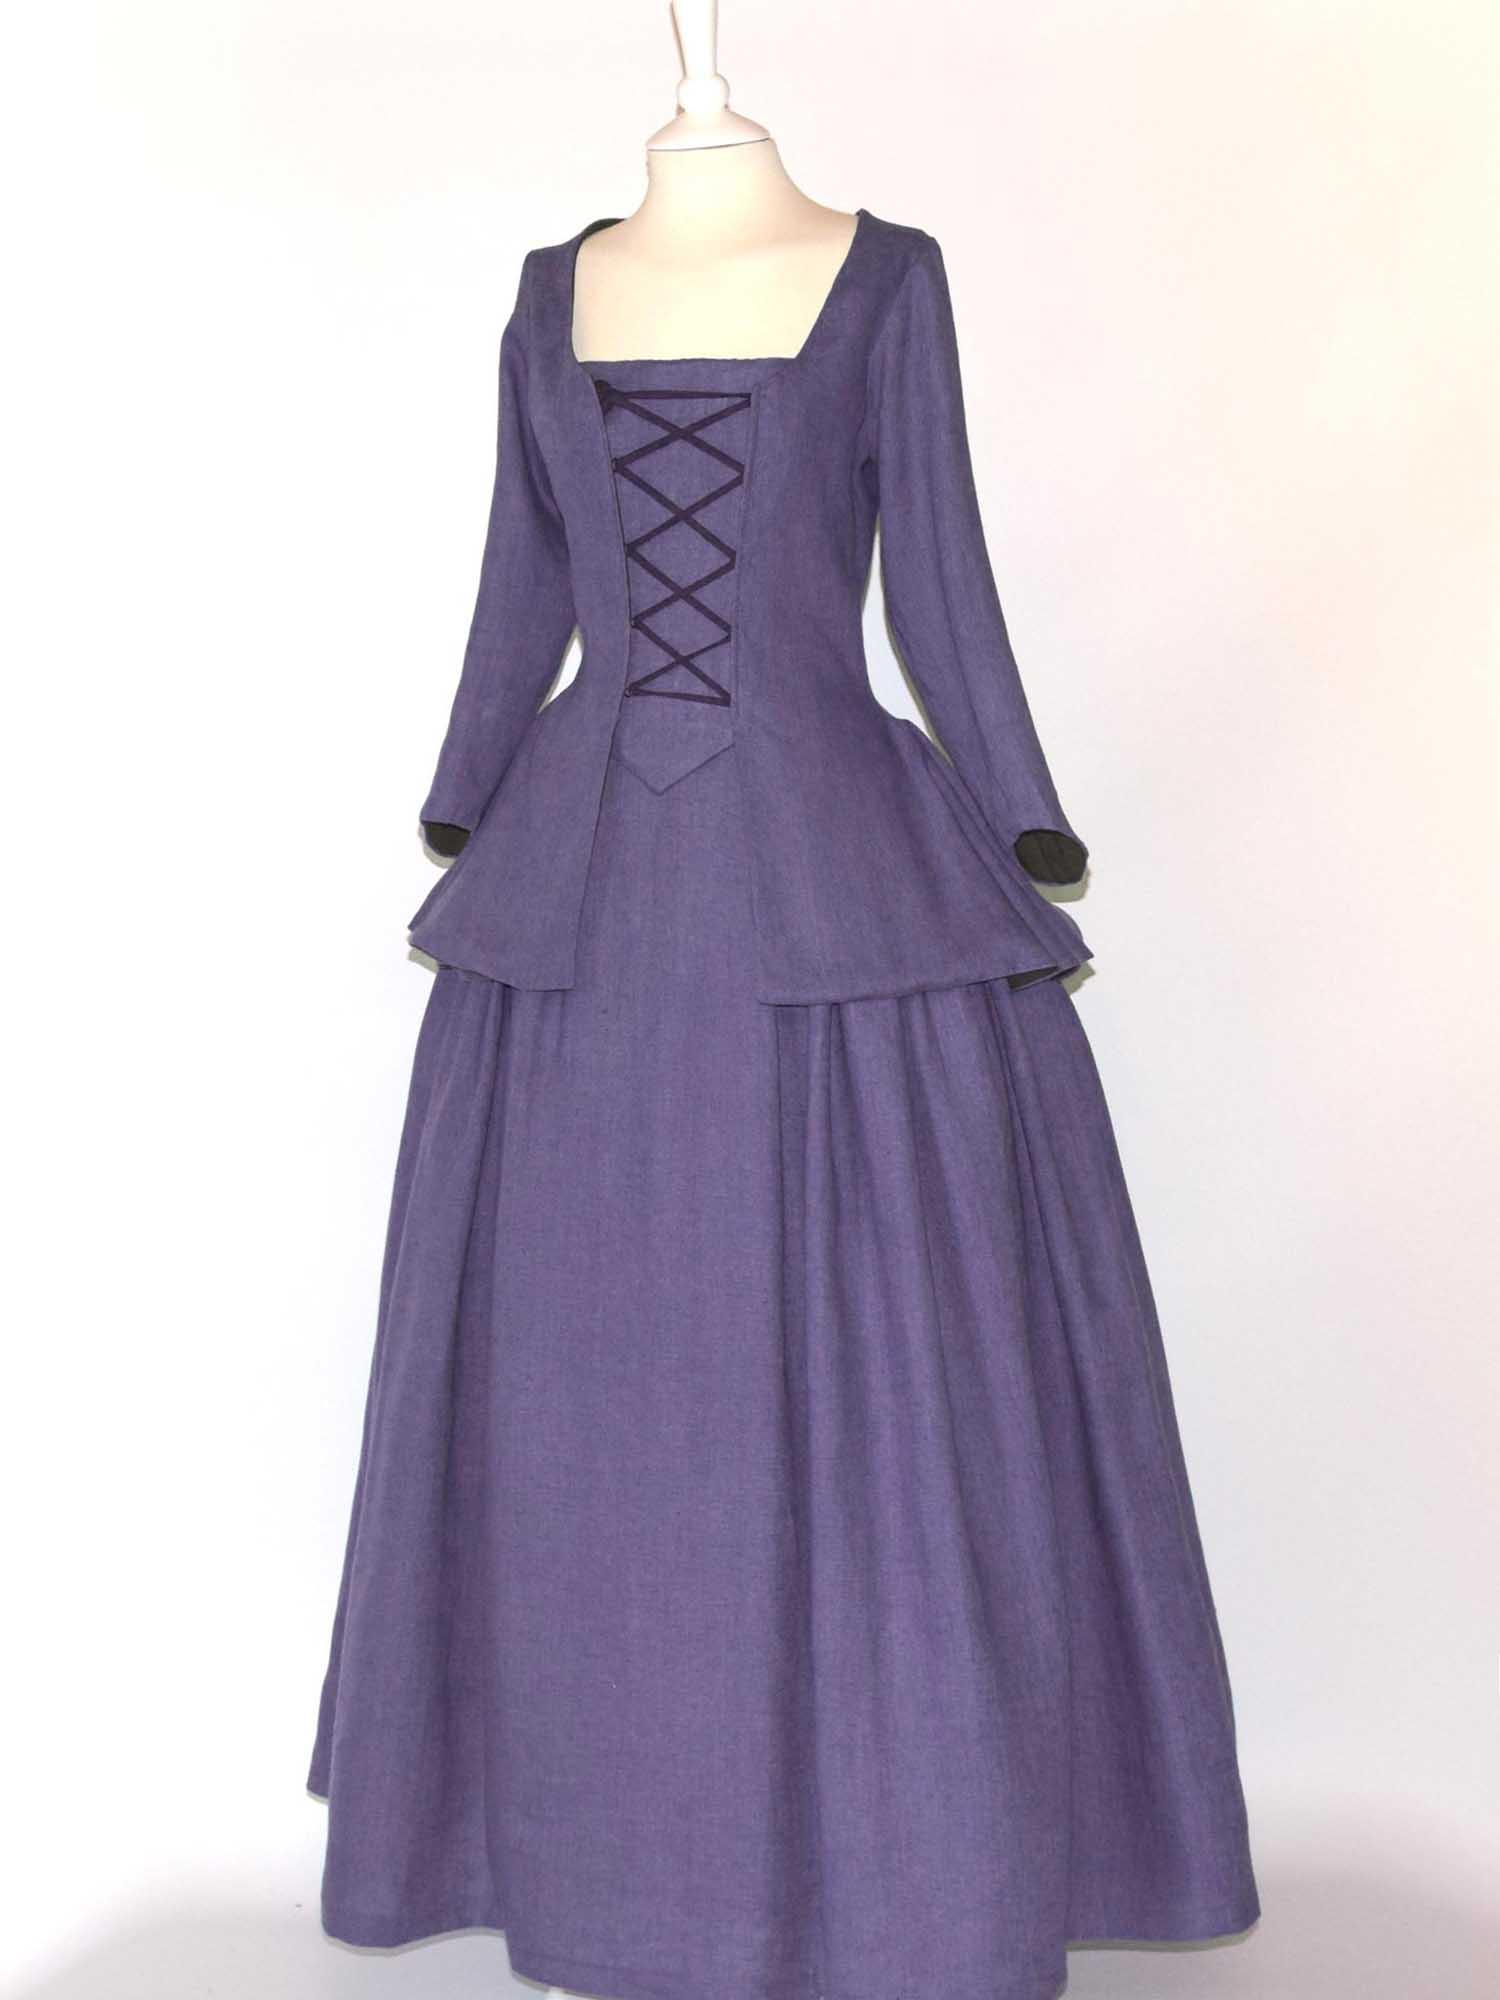 JANET, Colonial Costume in Plum Purple Linen - Atelier Serraspina